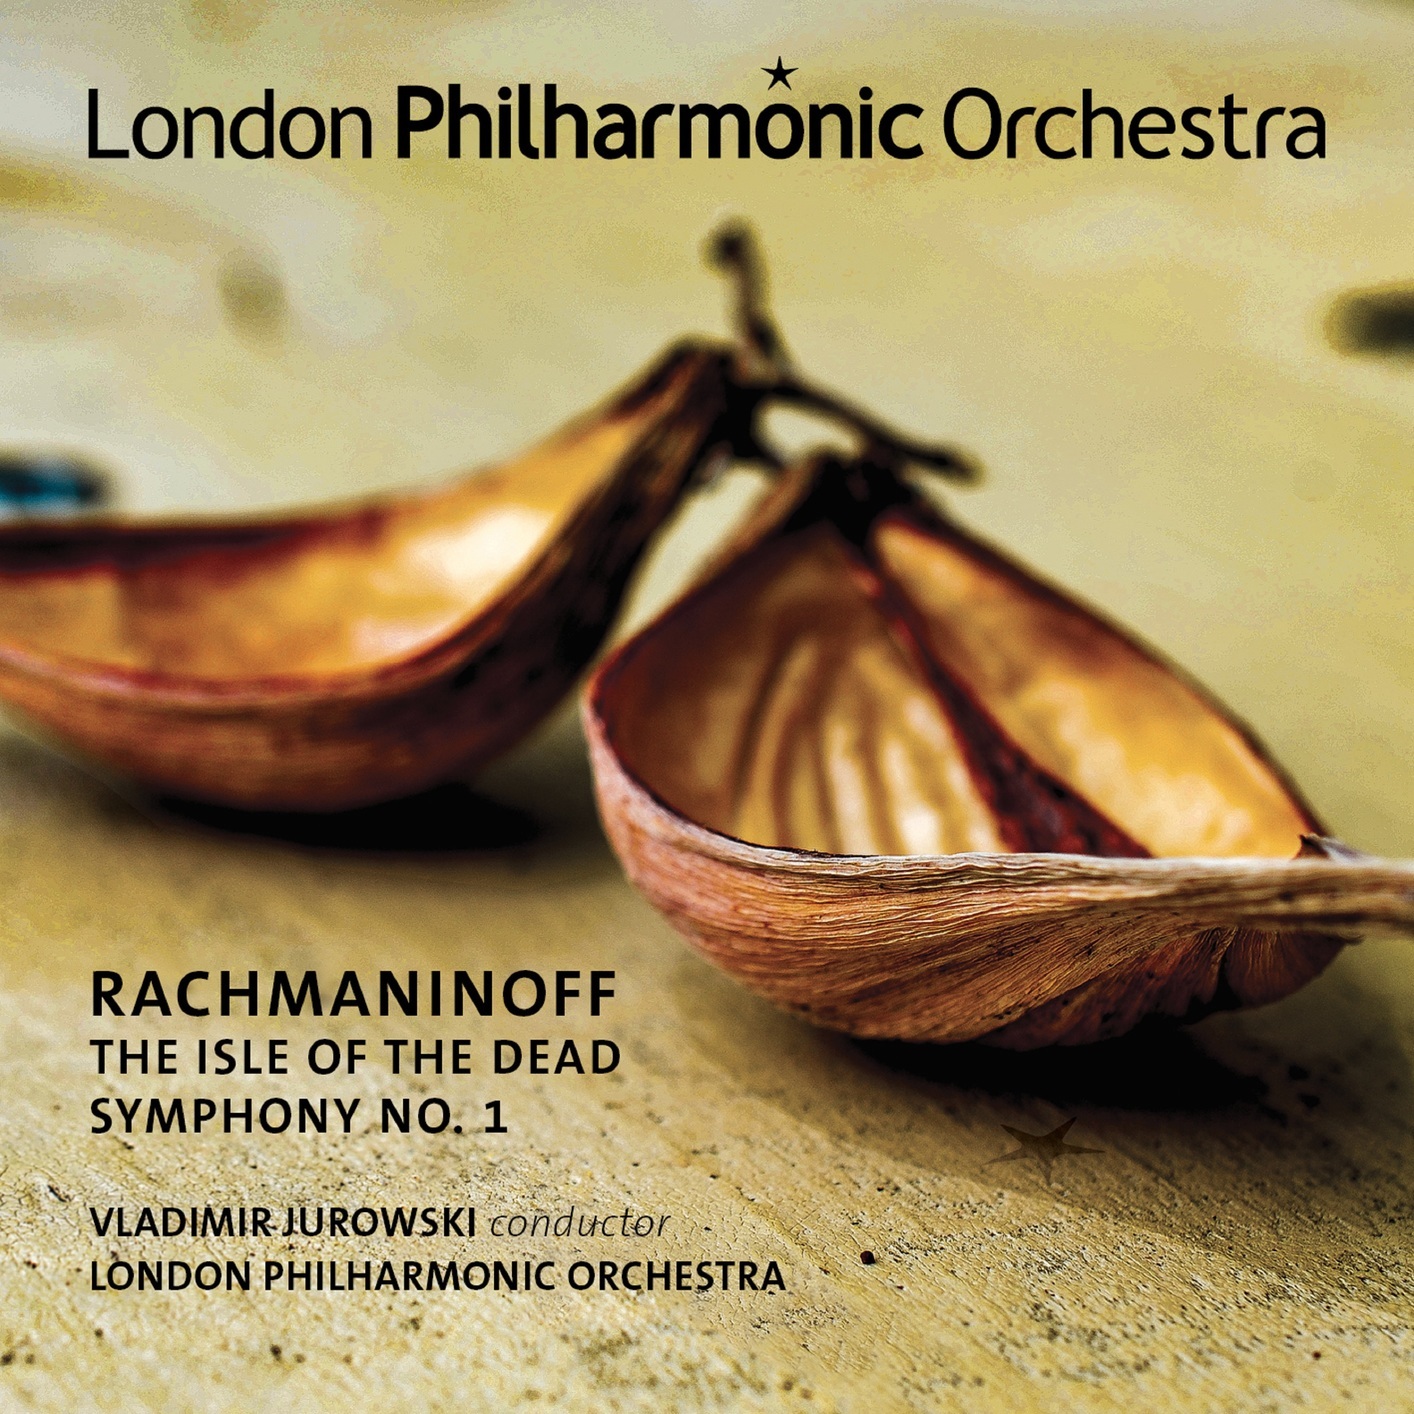 London Philharmonic Orchestra & Vladimir Jurowski - Rachmaninoff: Symphony No. 1 & Isle of the Dead (2019) [FLAC 24bit/96kHz]